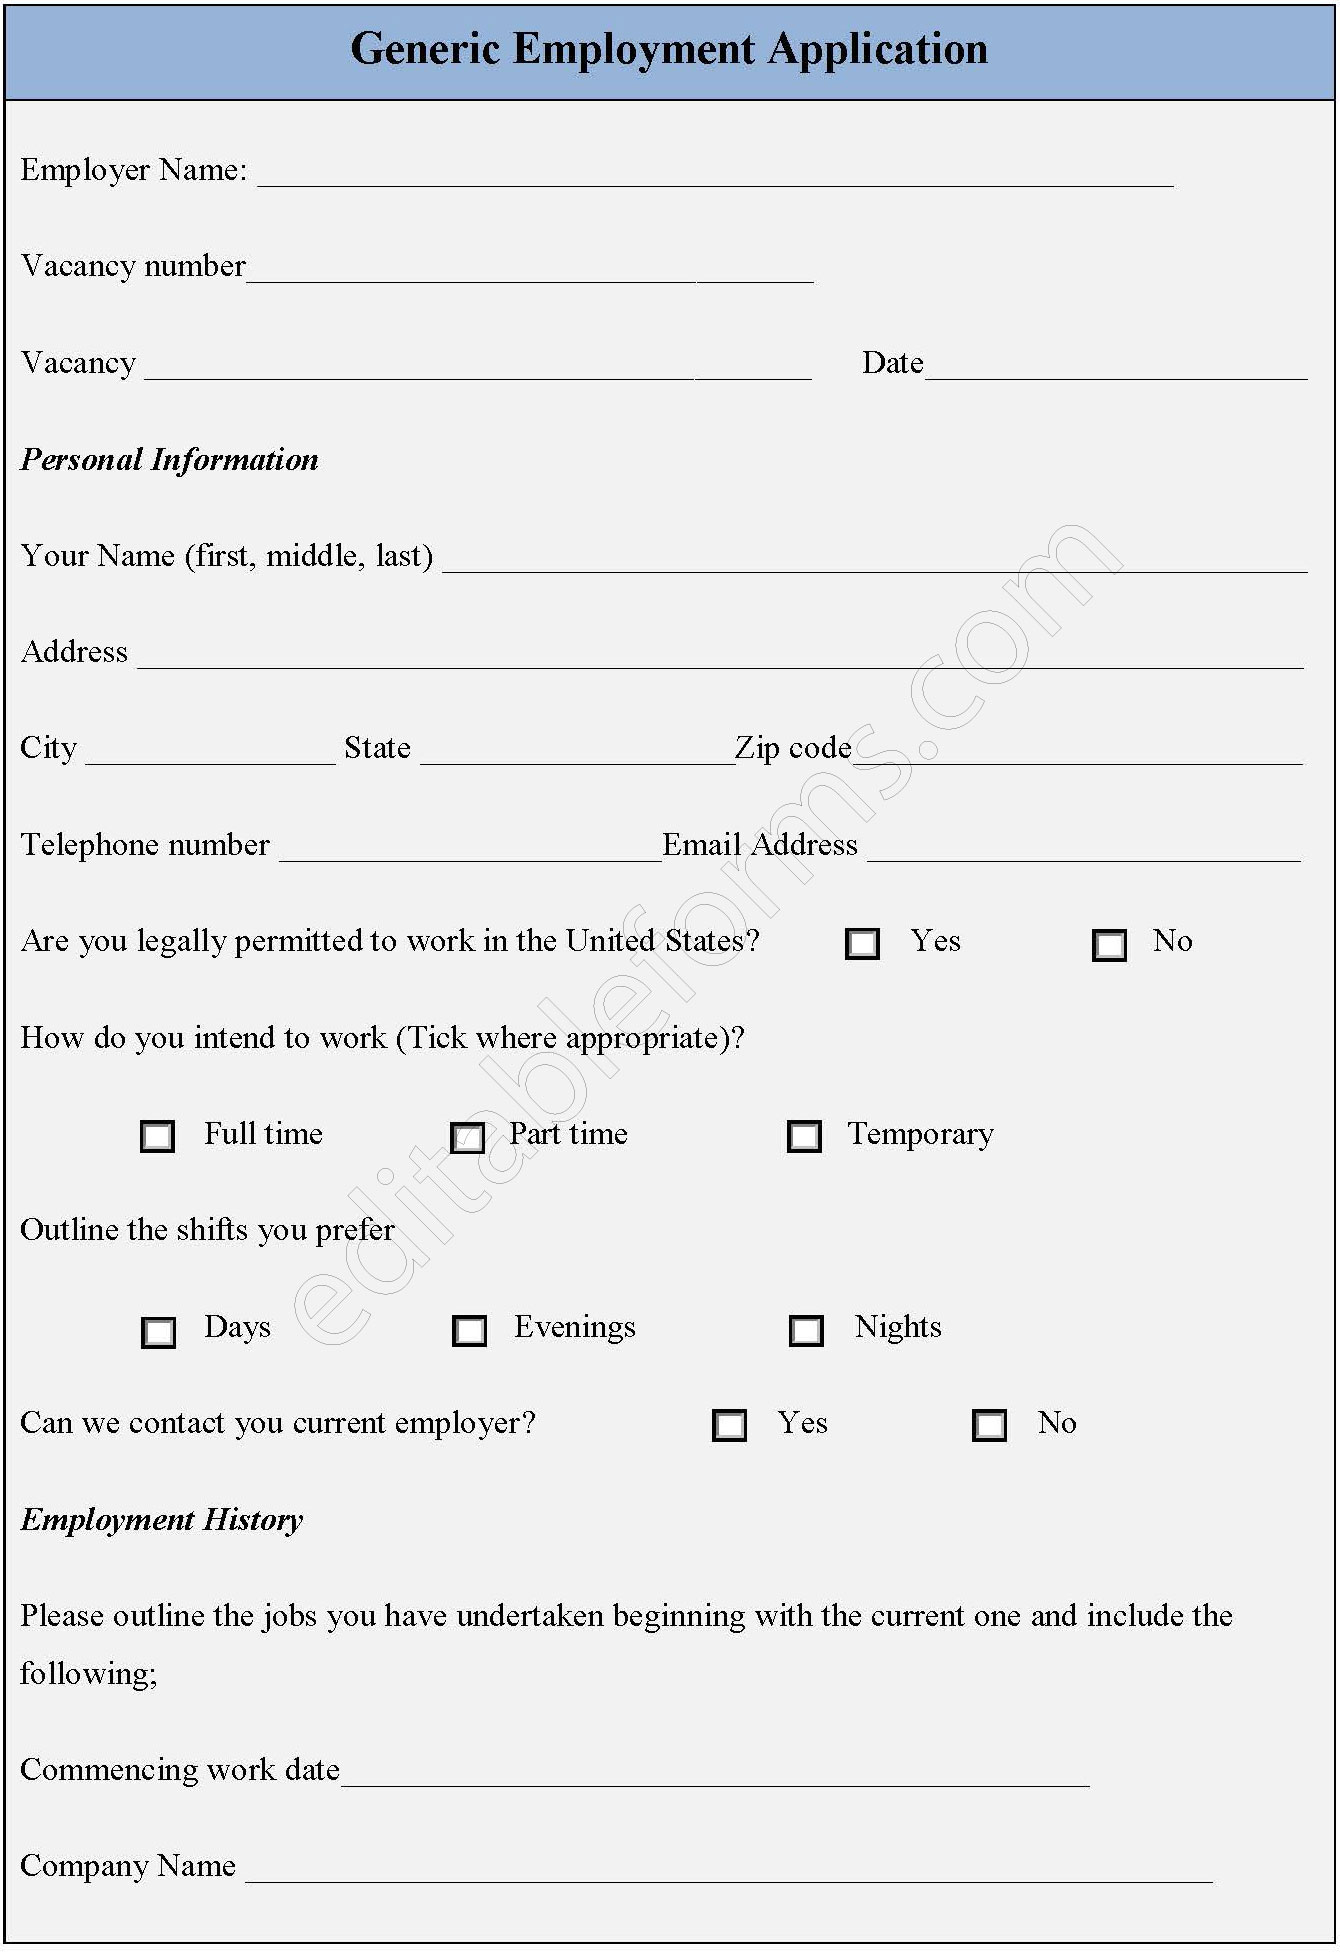 Generic Employment Application Form